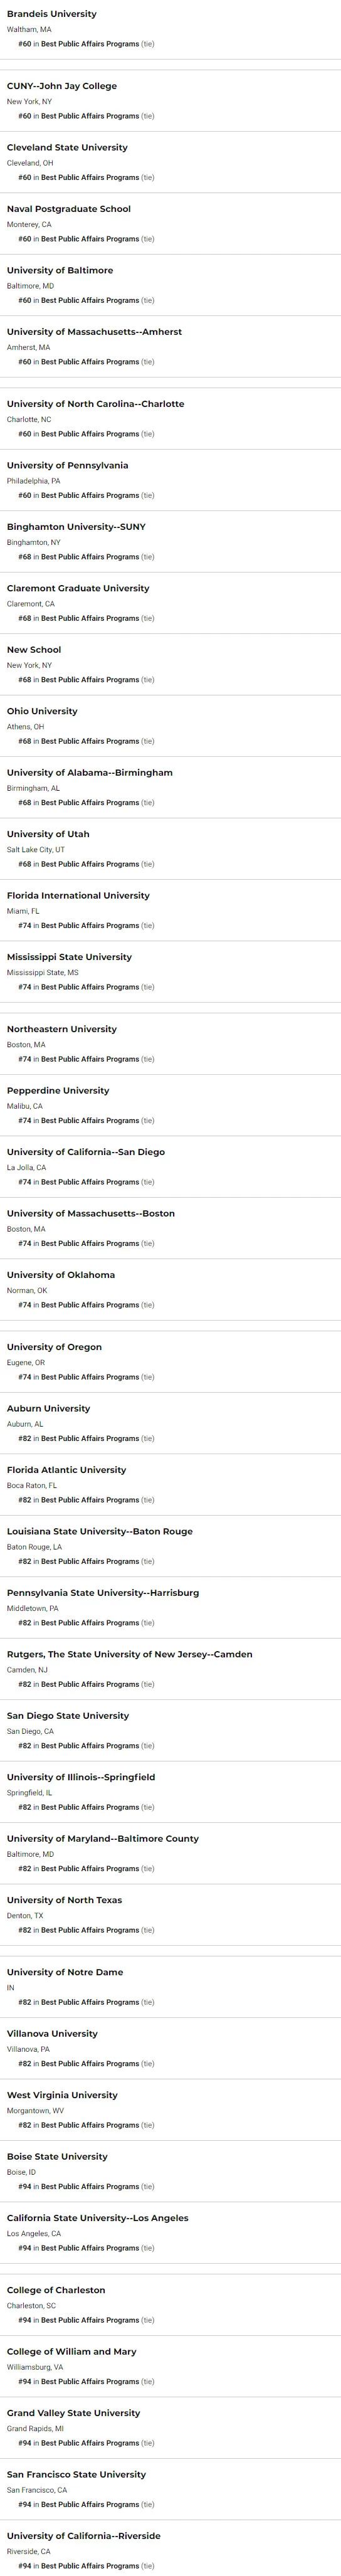 2020USnews美国大学公共事务学院排名